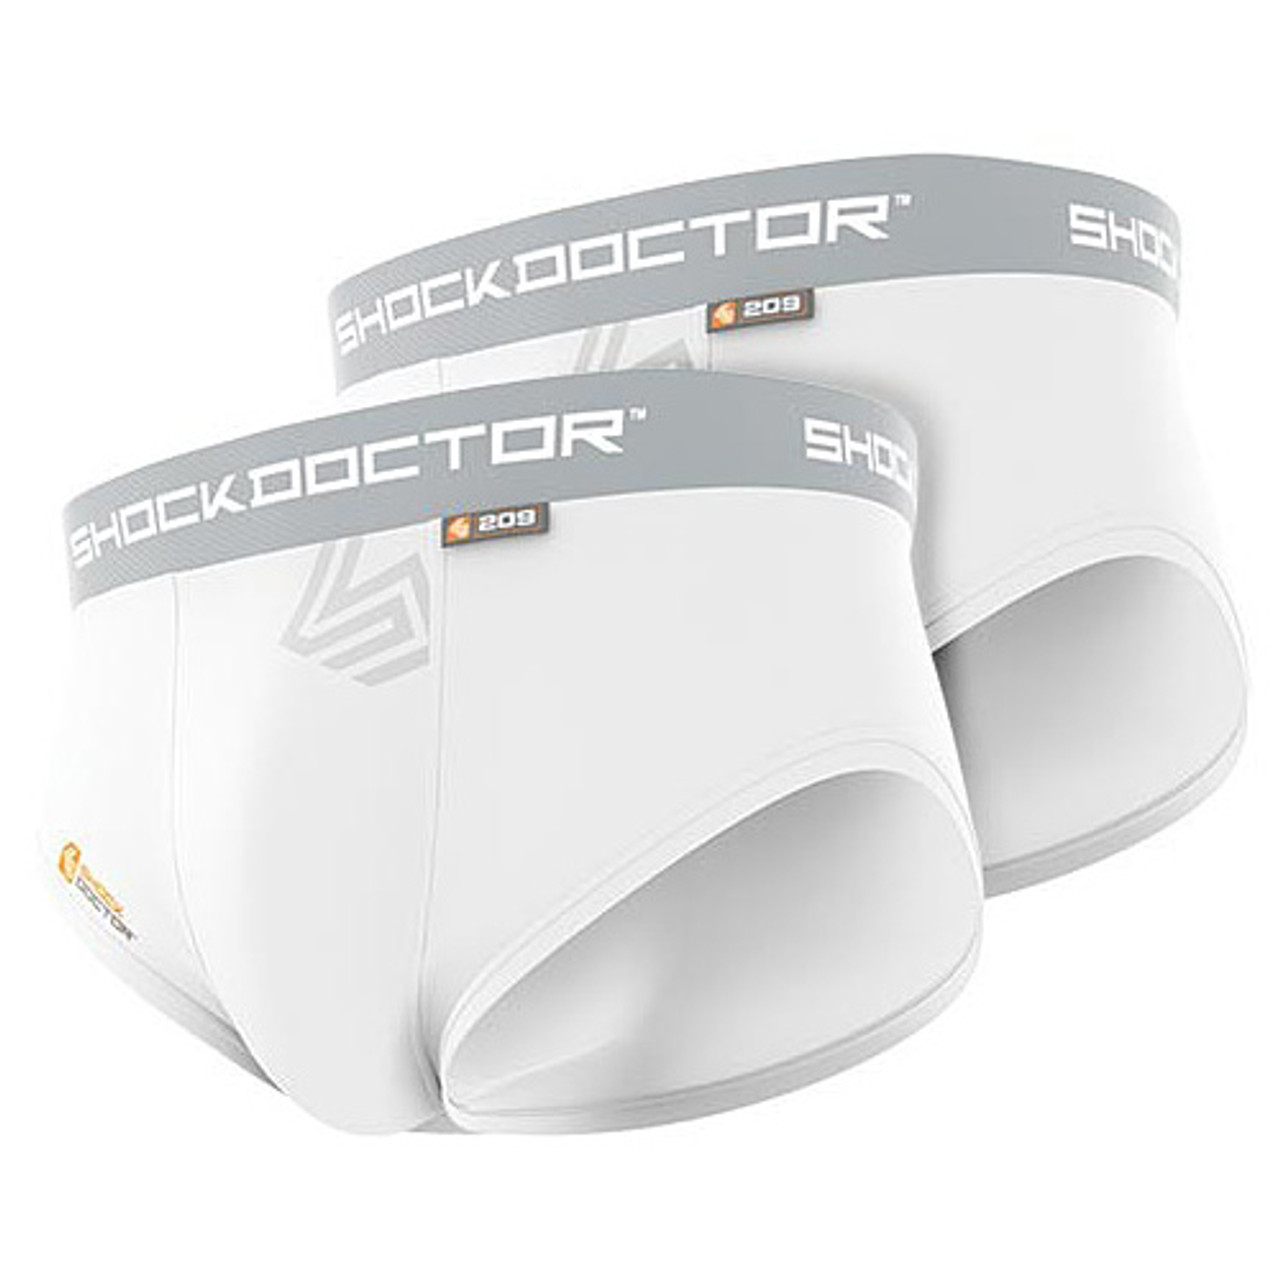 Shock Doctor Boys Core Supporter w/ BioFlex Cup 213